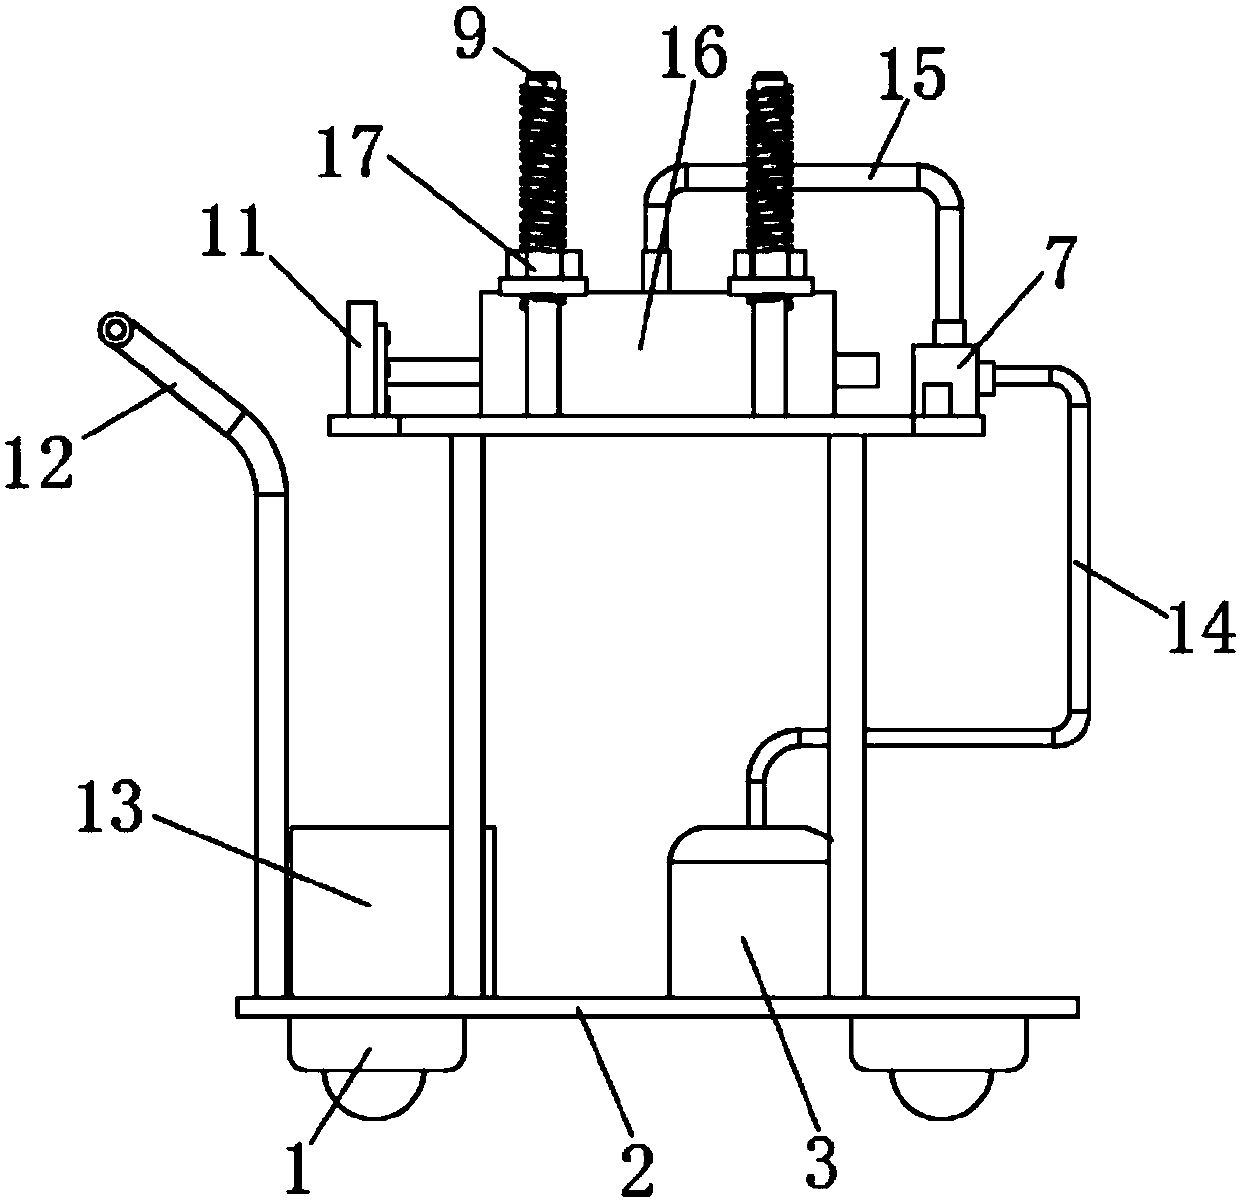 Automobile air conditioner compressor valve group air tightness detection device